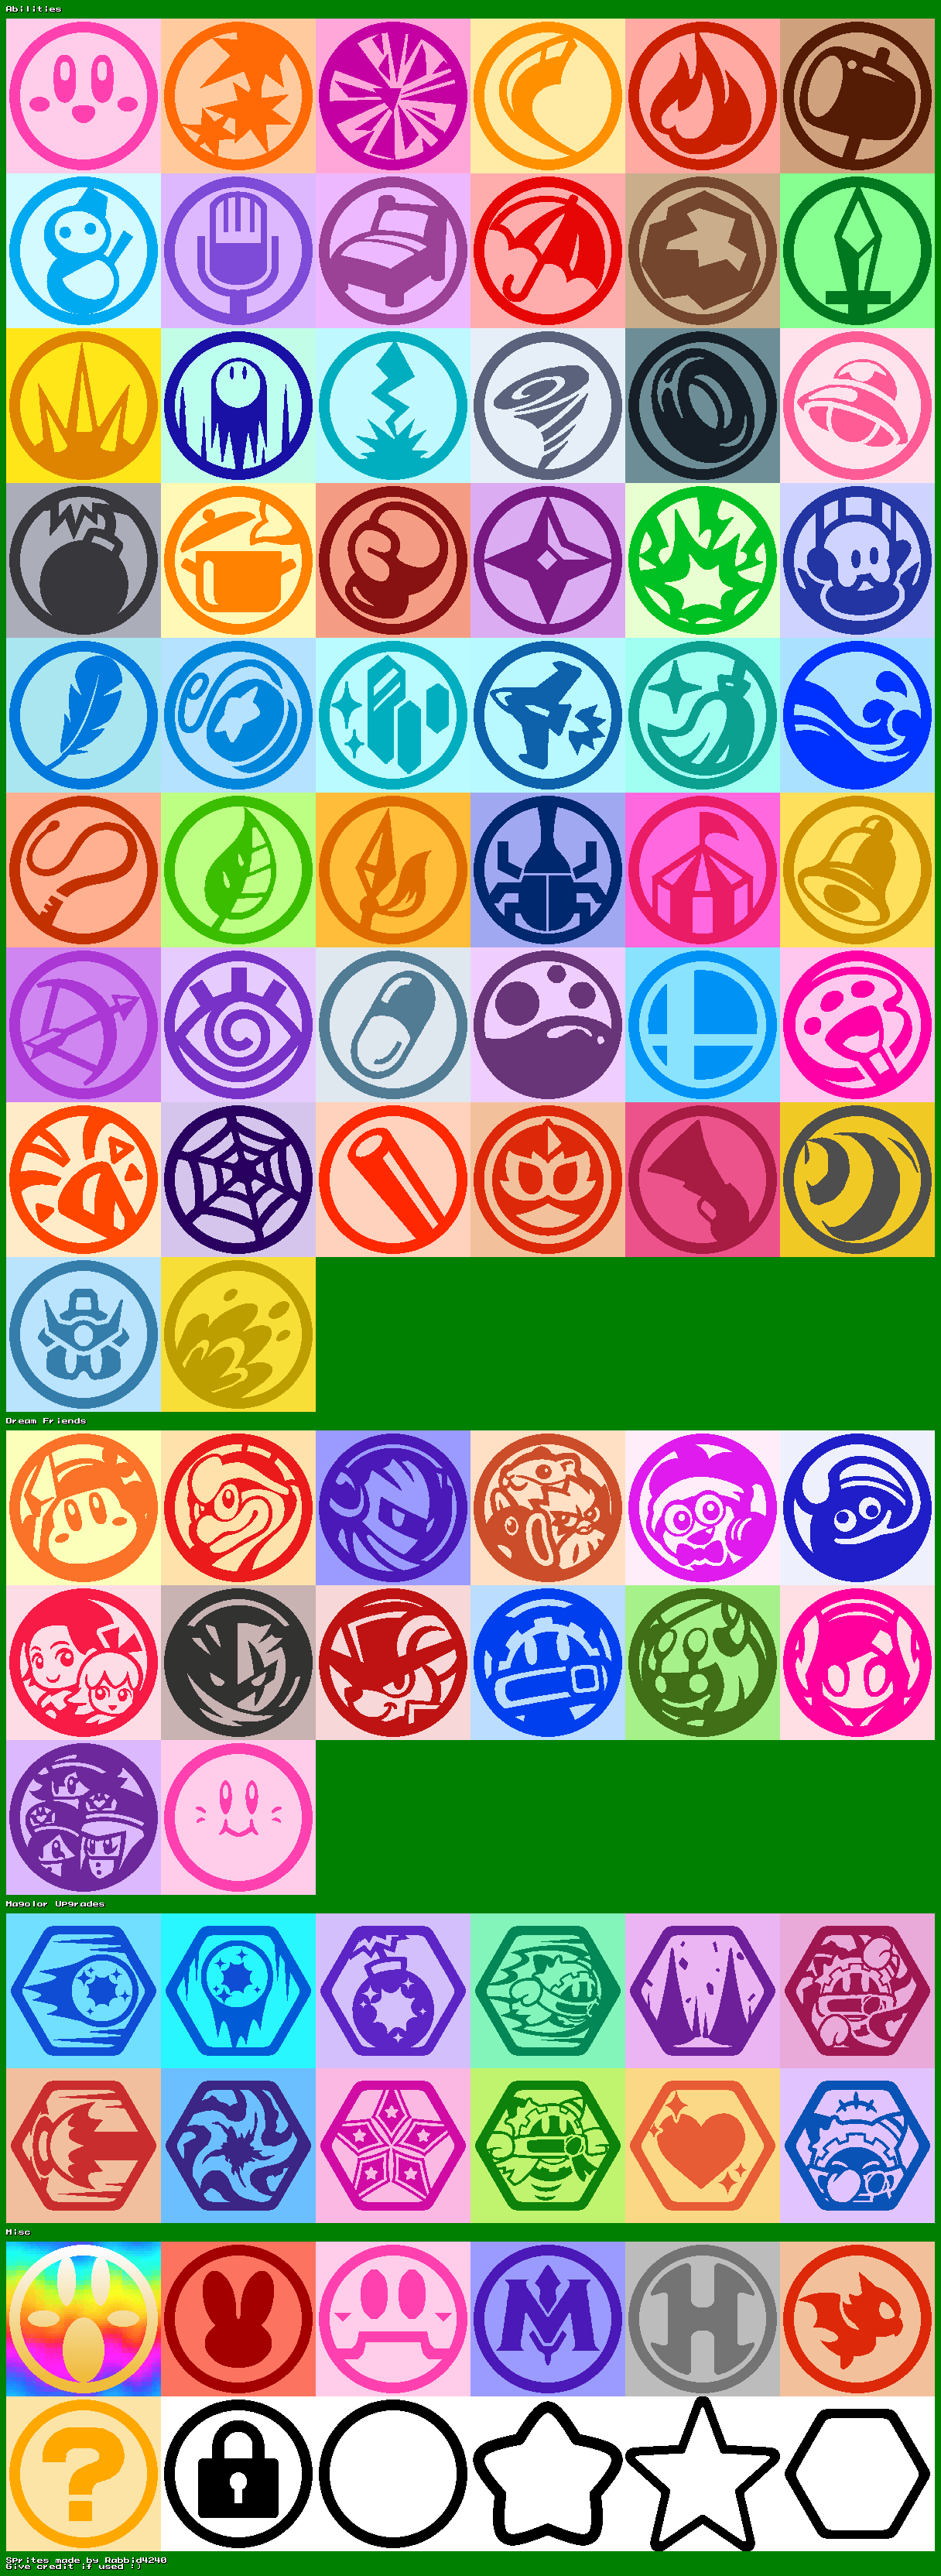 Kirby Customs - Ability Icons (KSA-Style)